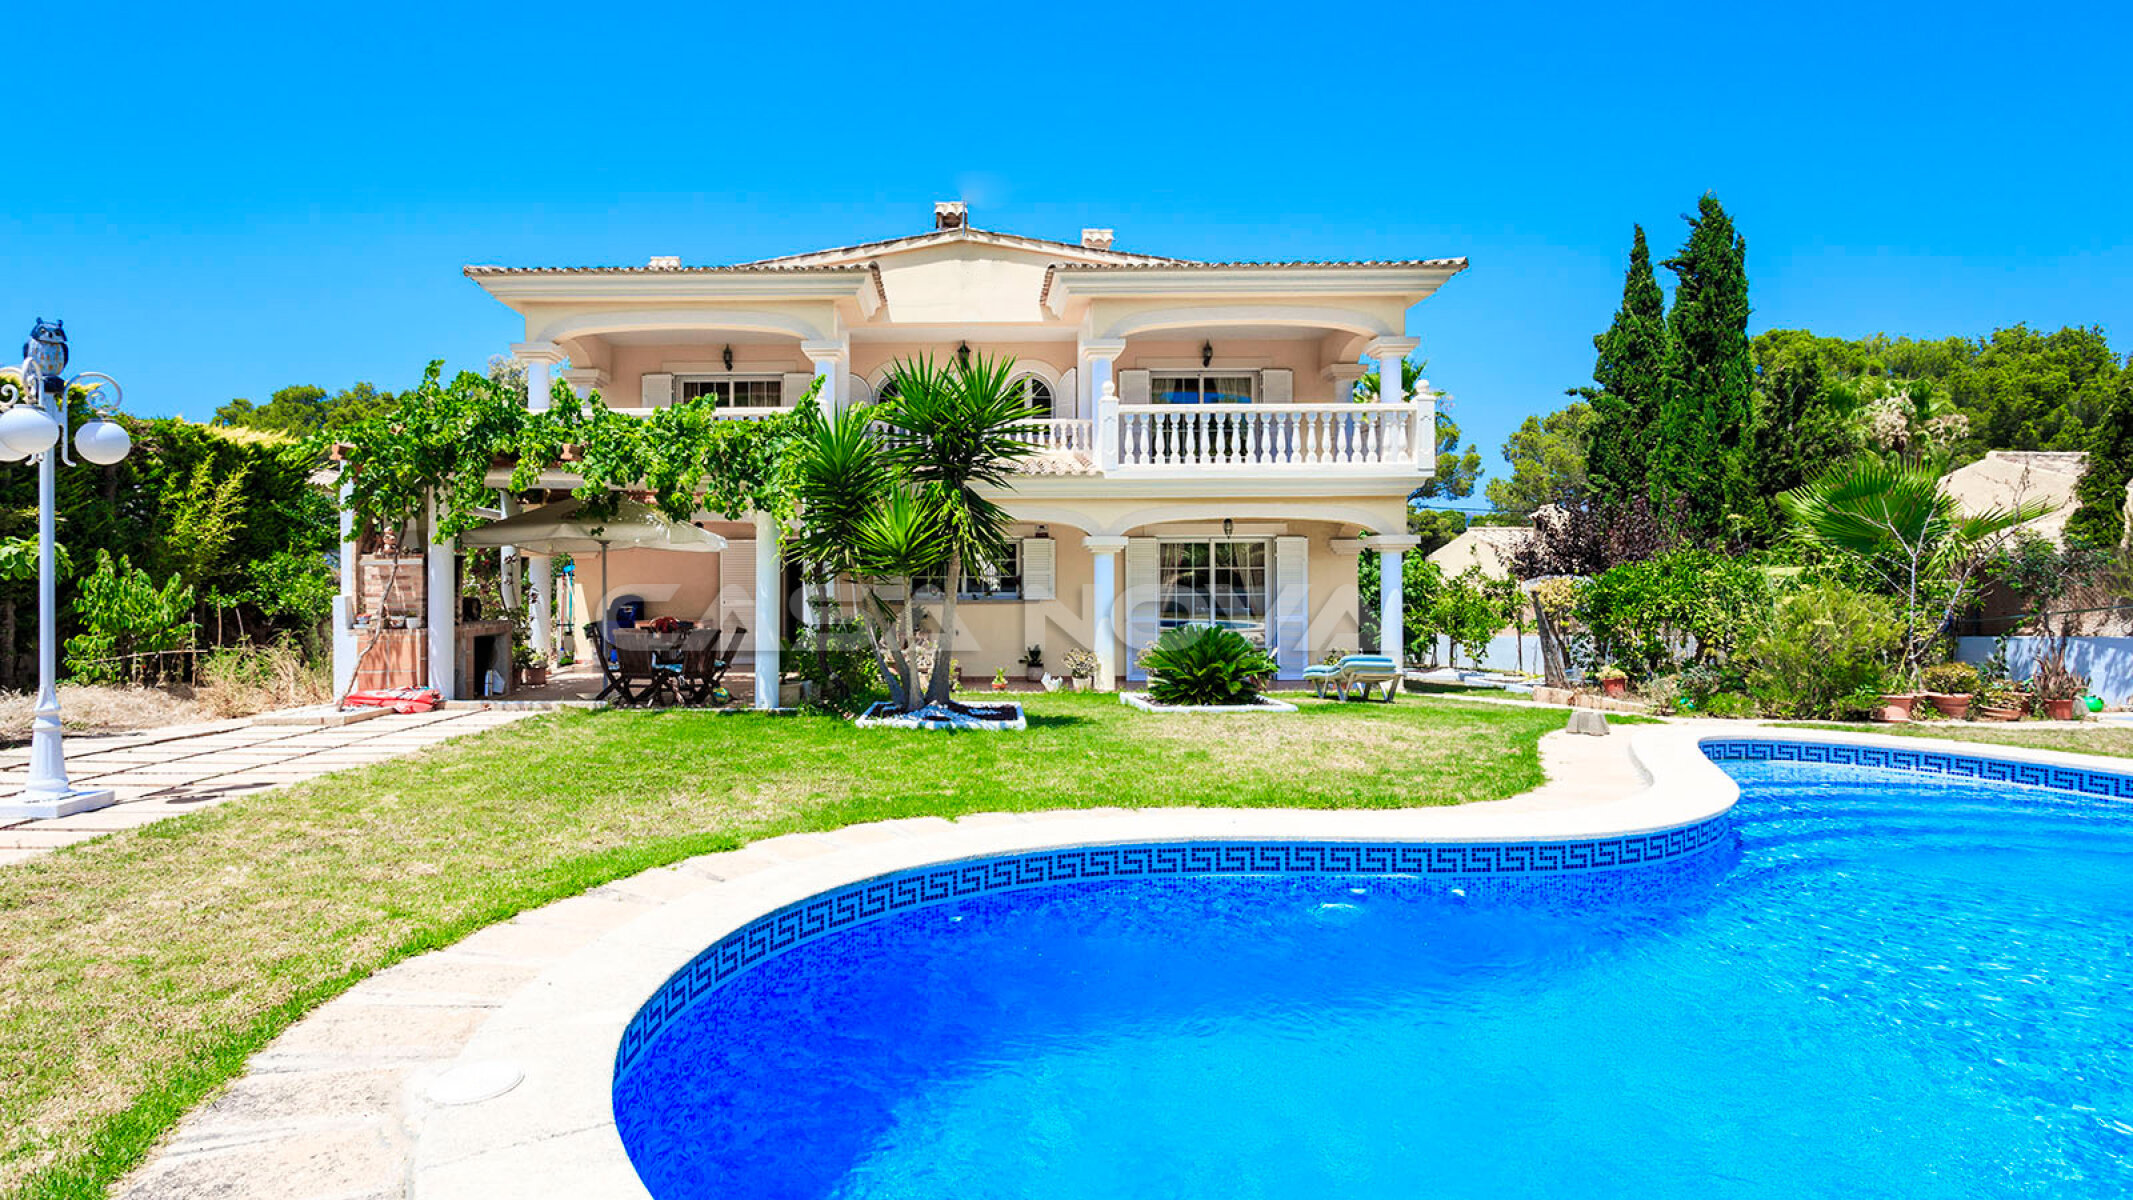 Exclusive Mallorca villa in Mediterranean style and pool